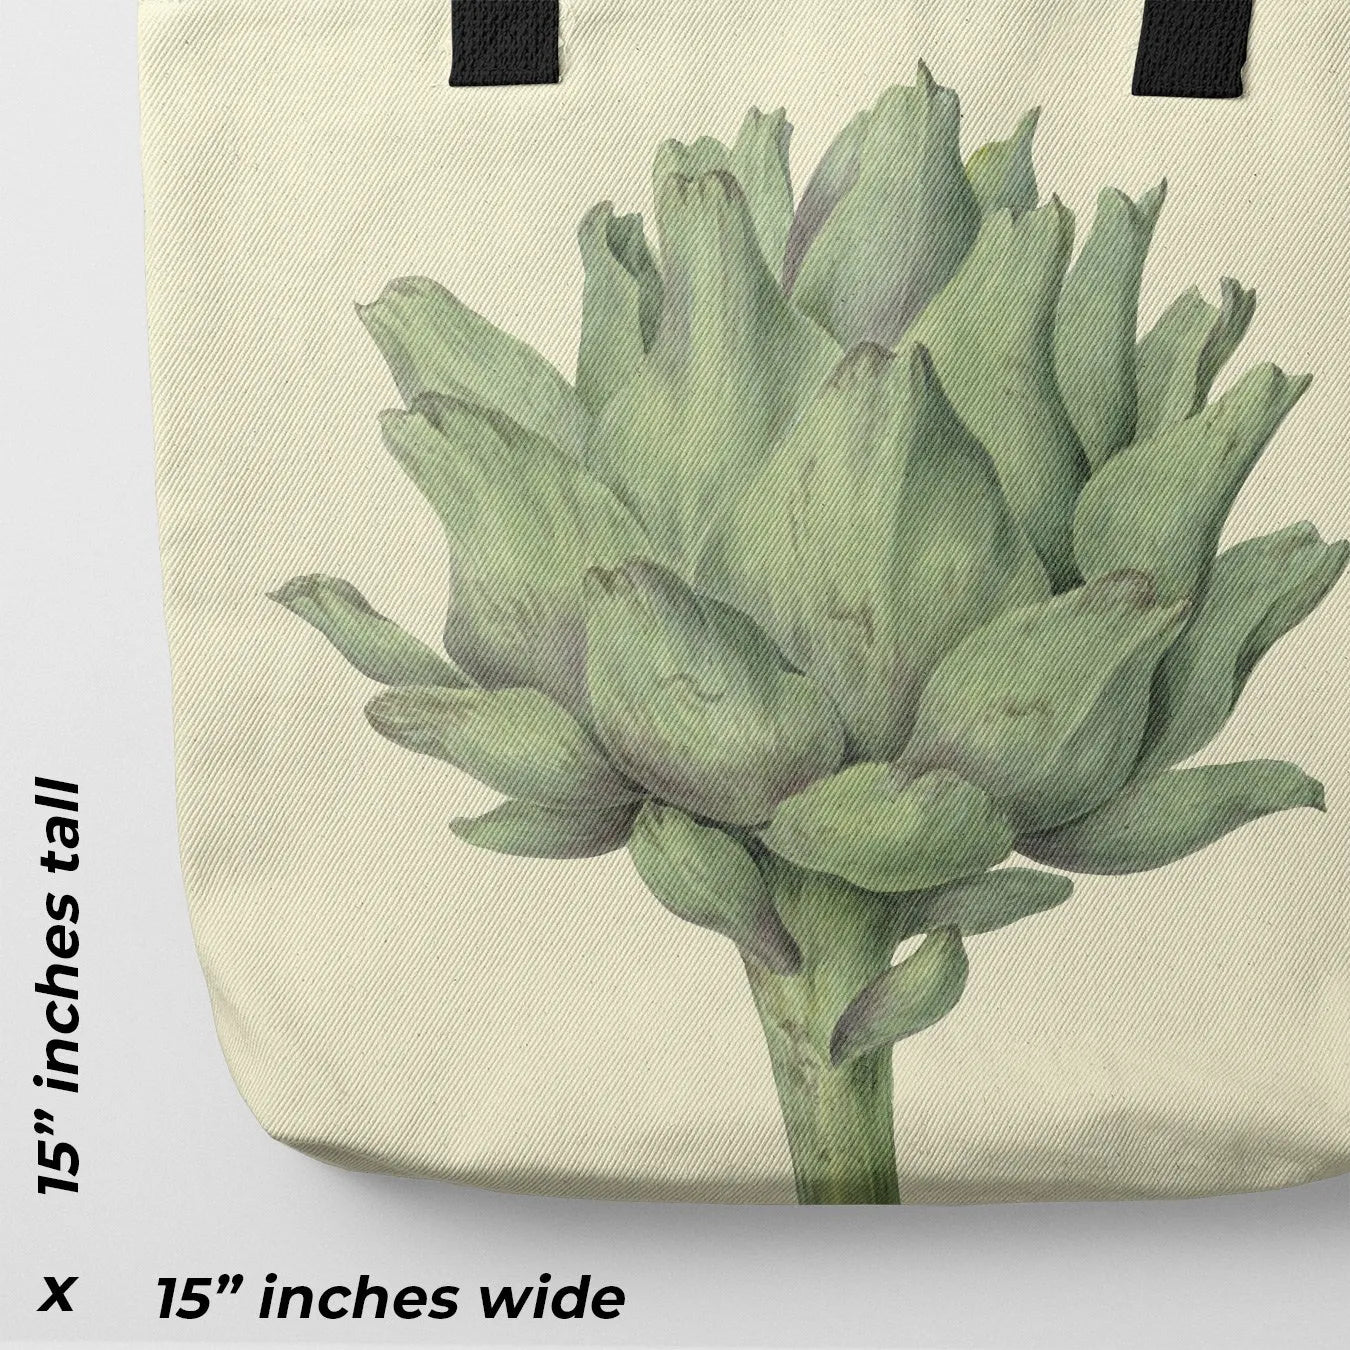 Heartichoke Tote - Lemon Butter - Heavy Duty Reusable Grocery Bag - Shopping Totes - Aesthetic Art